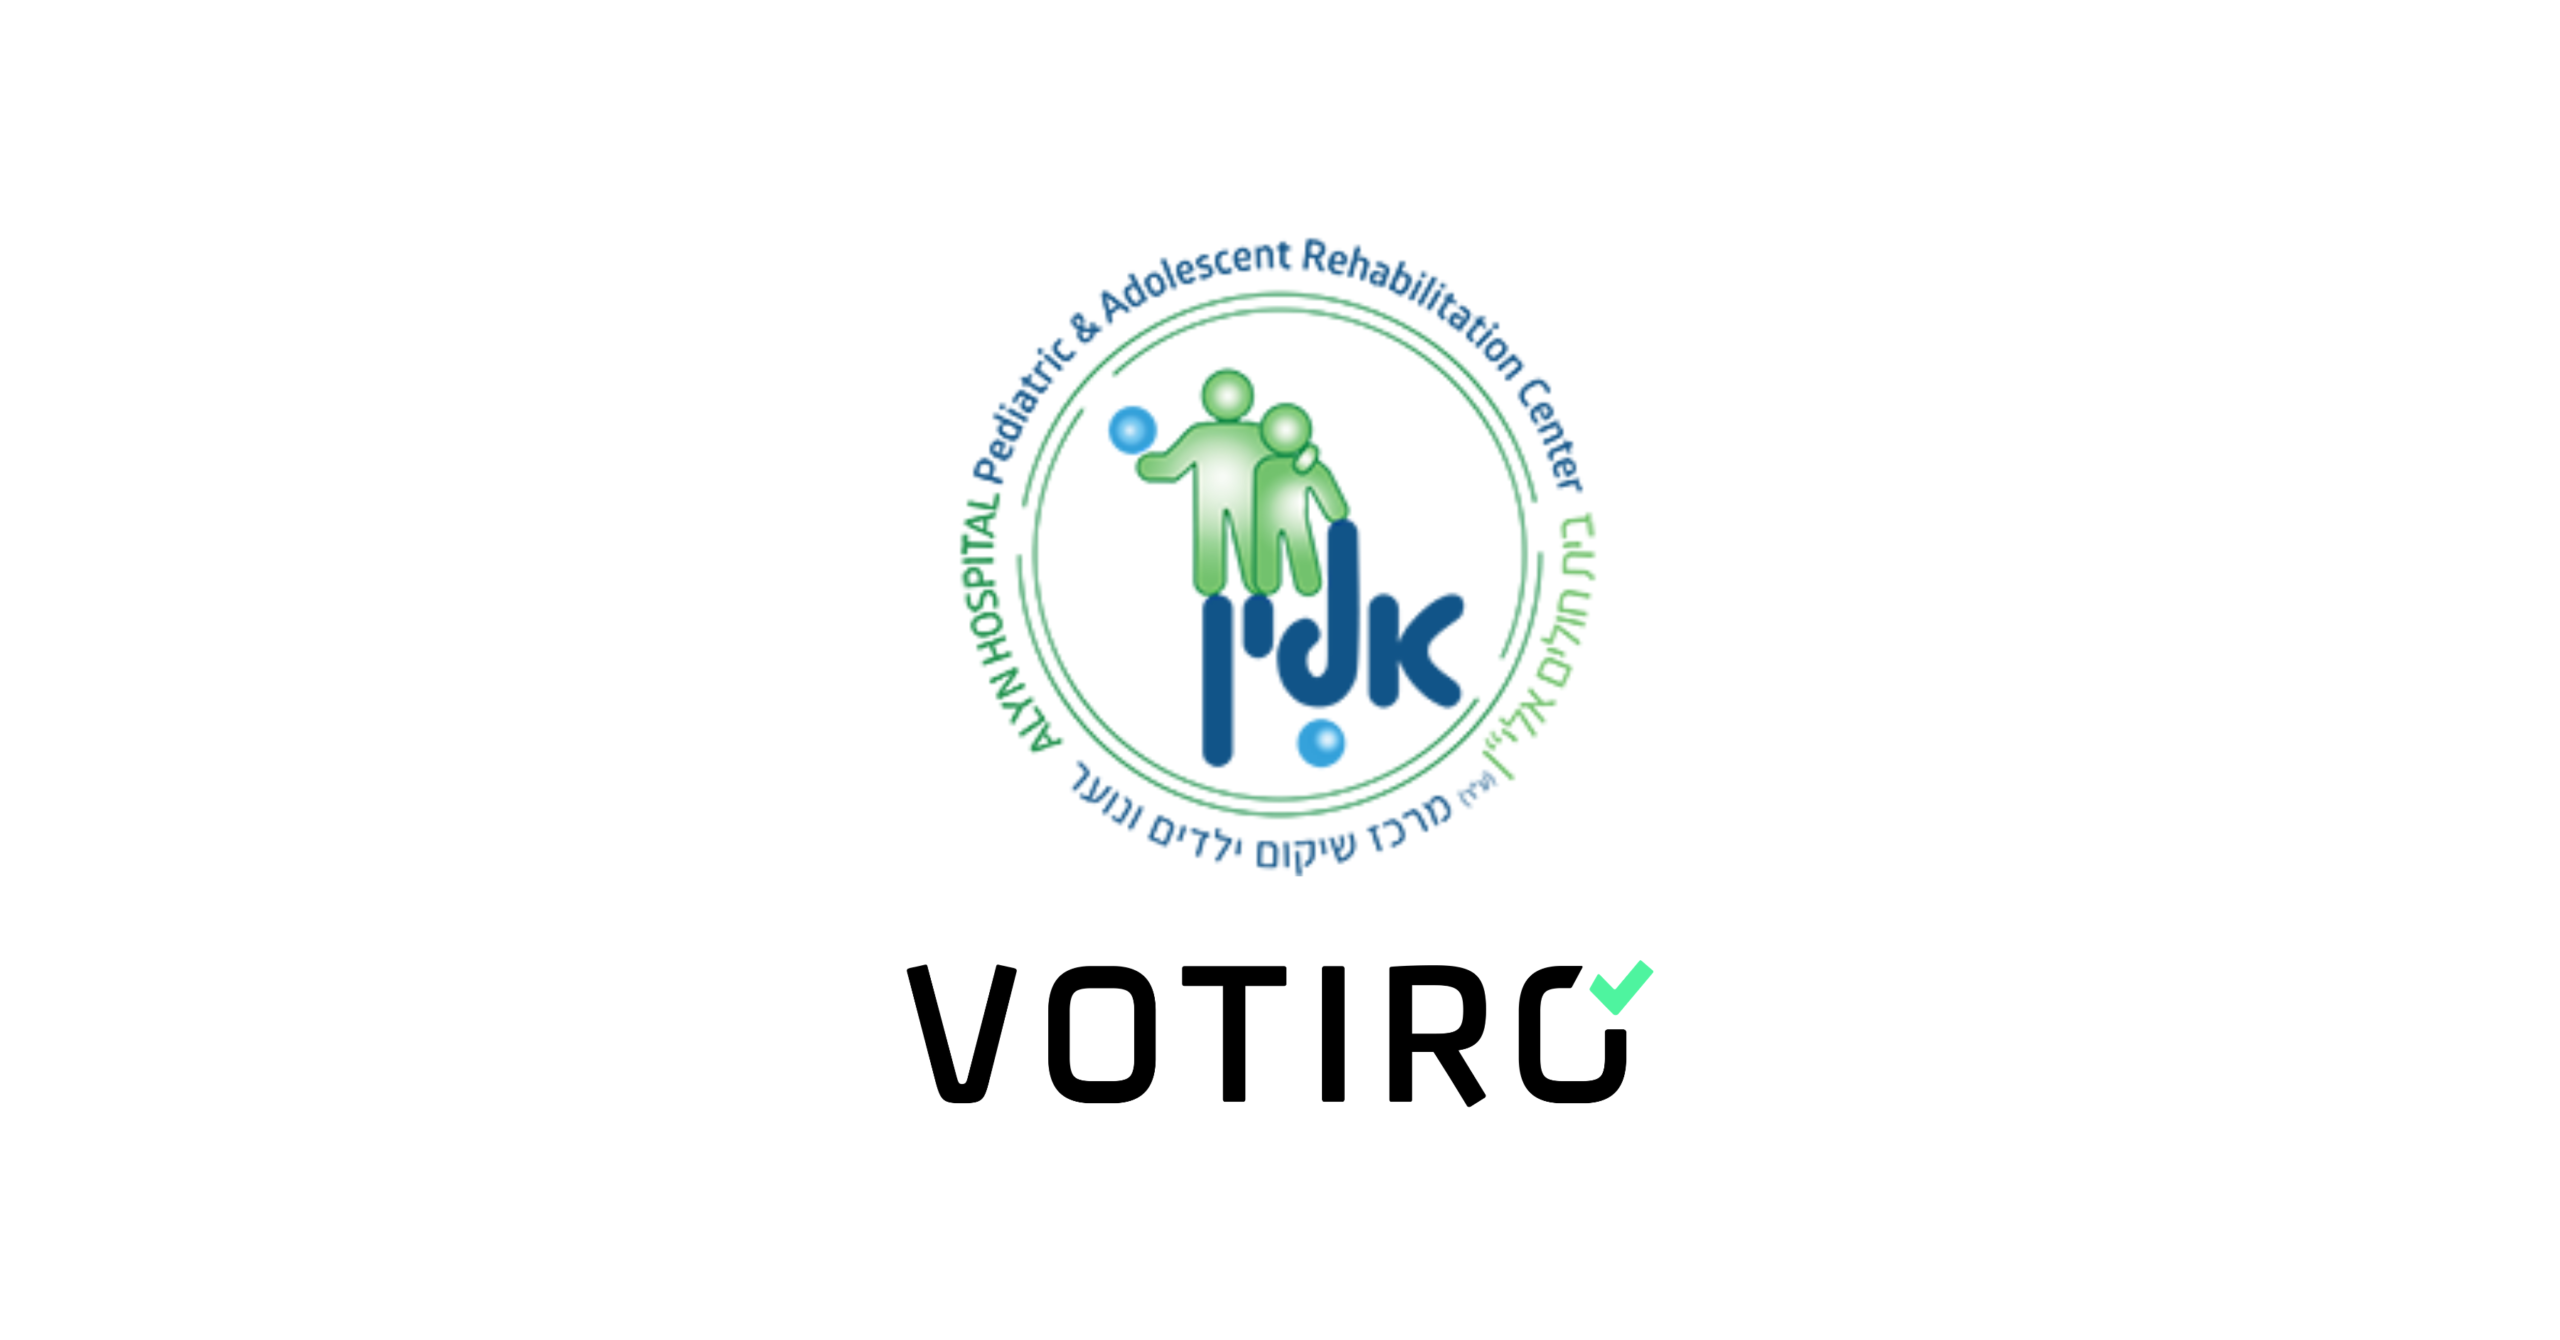 Logo of Alyn Hospital Pediatric & Adolescent Rehabilitation Center with Votiro logo underneath it, with both logos on white background - Votiro